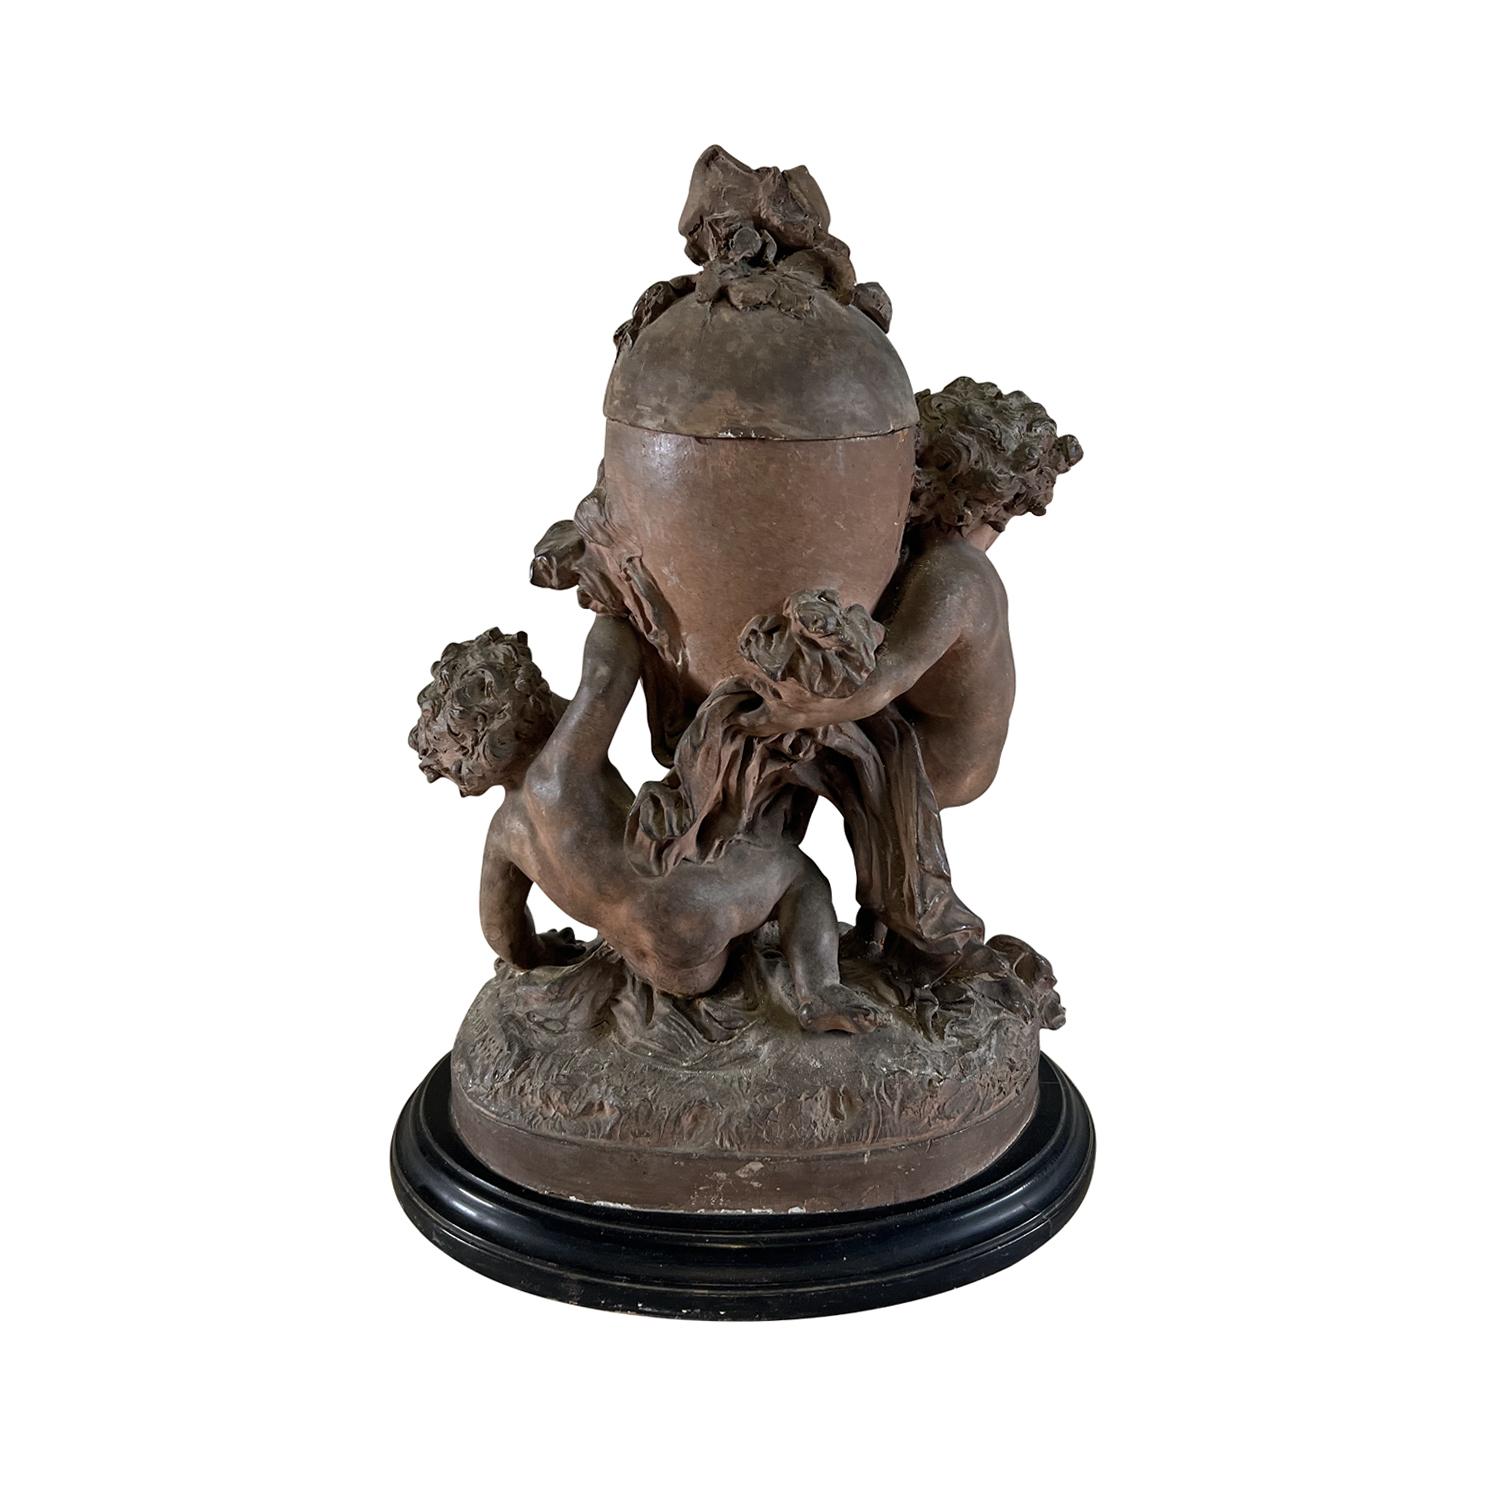 Hand-Crafted 19th Century French Antique Terra Cotta Cherub Figurine Statuette Objet d’Art  For Sale